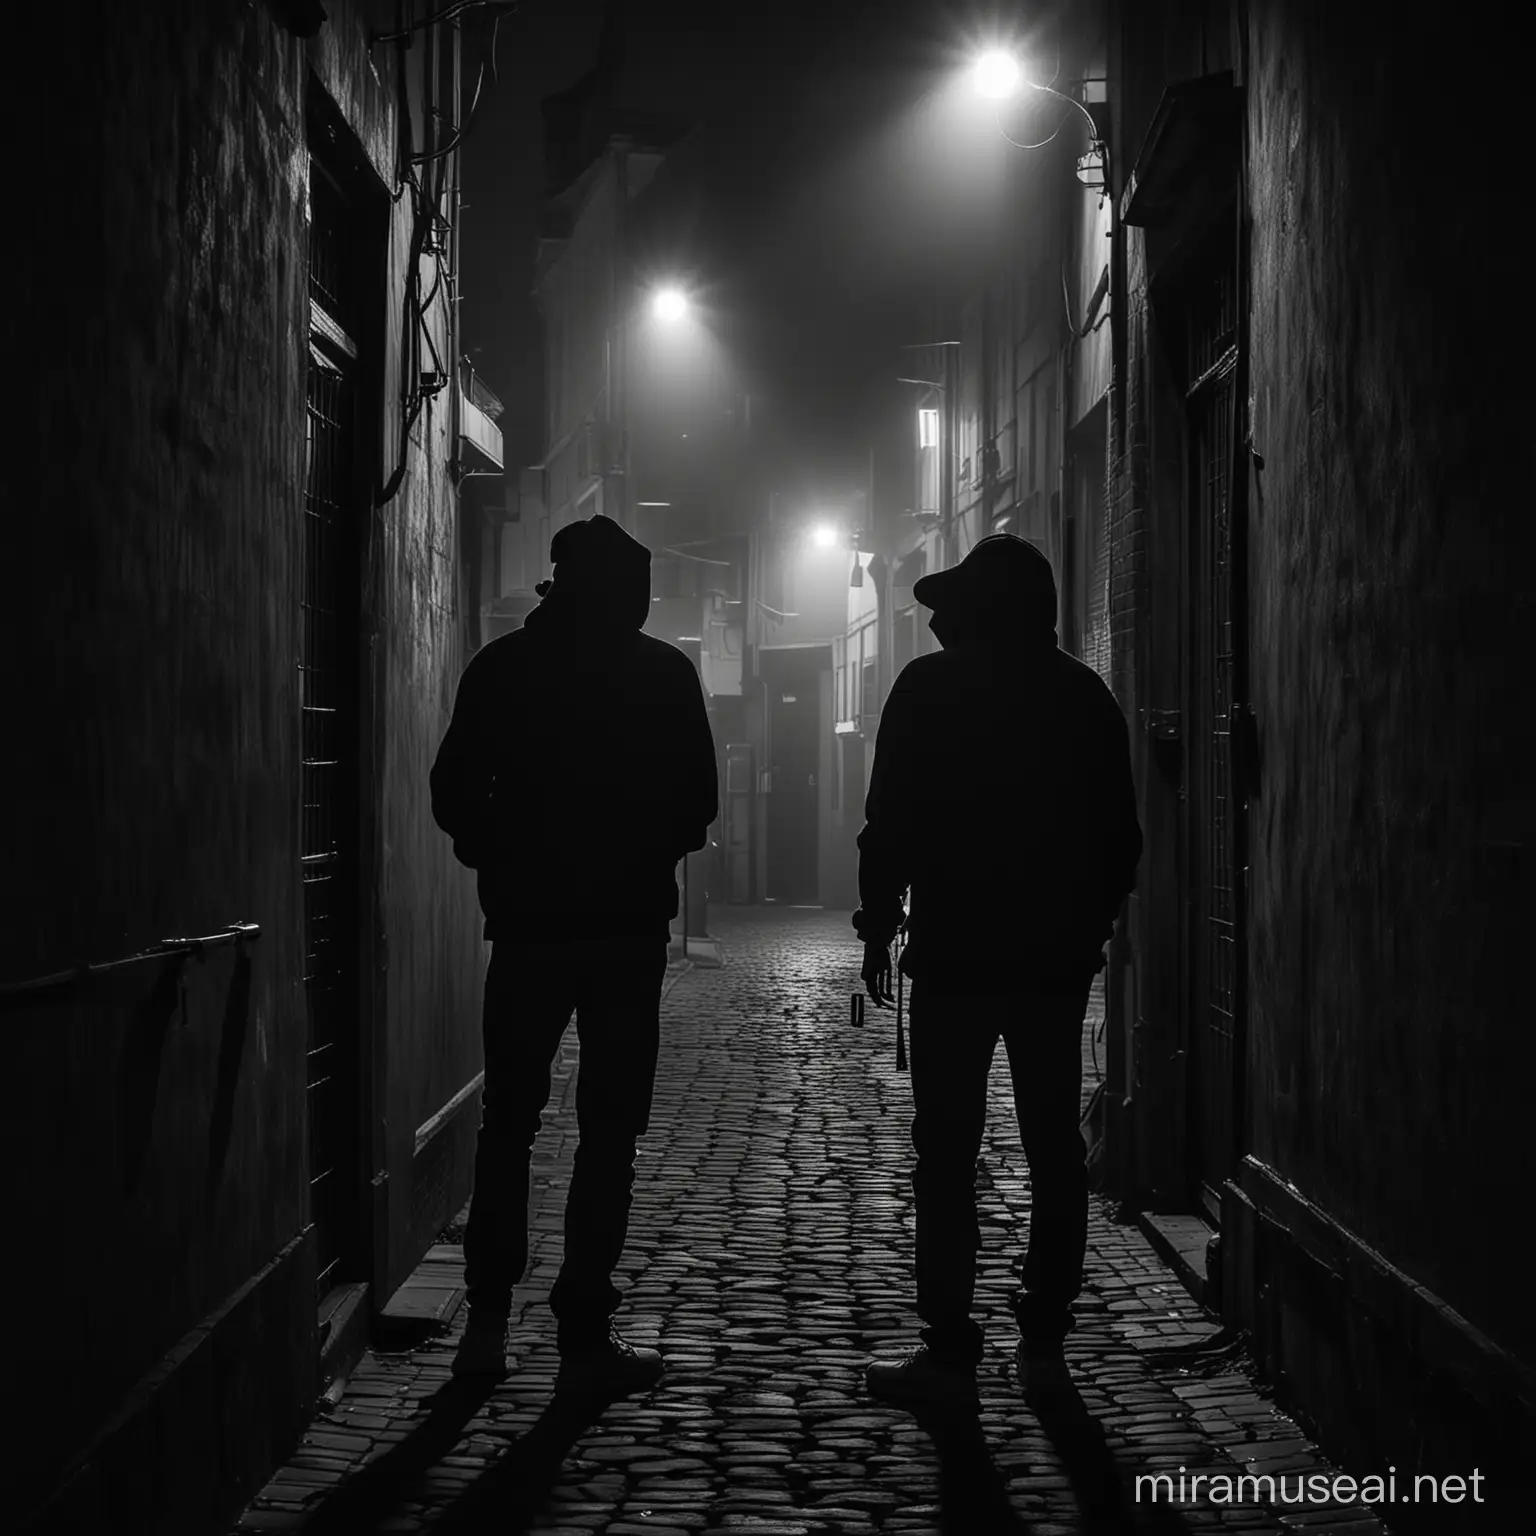 Brussels Night Shadowy Figures in Urban Alley